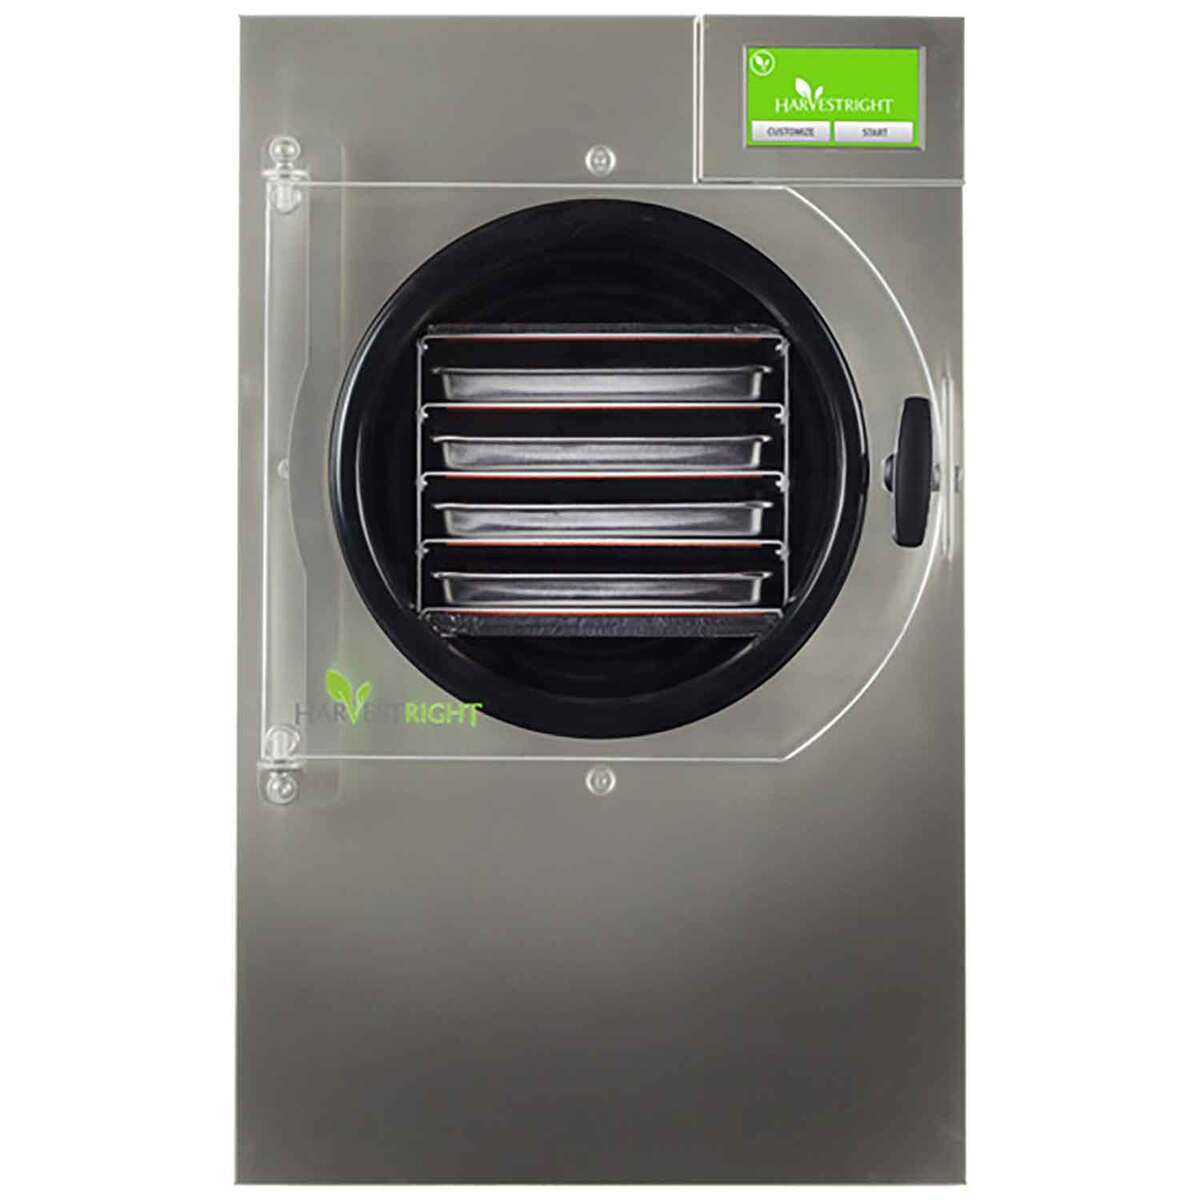 https://www.sportsmans.com/medias/harvest-right-small-4-tray-home-pro-freeze-dryer-with-mylar-starter-kit-stainless-steel-1858864-1.jpg?context=bWFzdGVyfGltYWdlc3w1MzQ4MnxpbWFnZS9qcGVnfGhjNi9oMjcvMTE3NDMwOTY4OTc1NjYvMTIwMC1jb252ZXJzaW9uRm9ybWF0X2Jhc2UtY29udmVyc2lvbkZvcm1hdF9zbXctMTg1ODg2NC0xLmpwZ3xlM2FmZmNjMjVhZWRhZmM2Njg5ZWNmZjI2MmM5ODBlYTg4YTdhZmNlZmYyMThkYTBmOGY0ZjRhNTU0ZDE4Nzkw